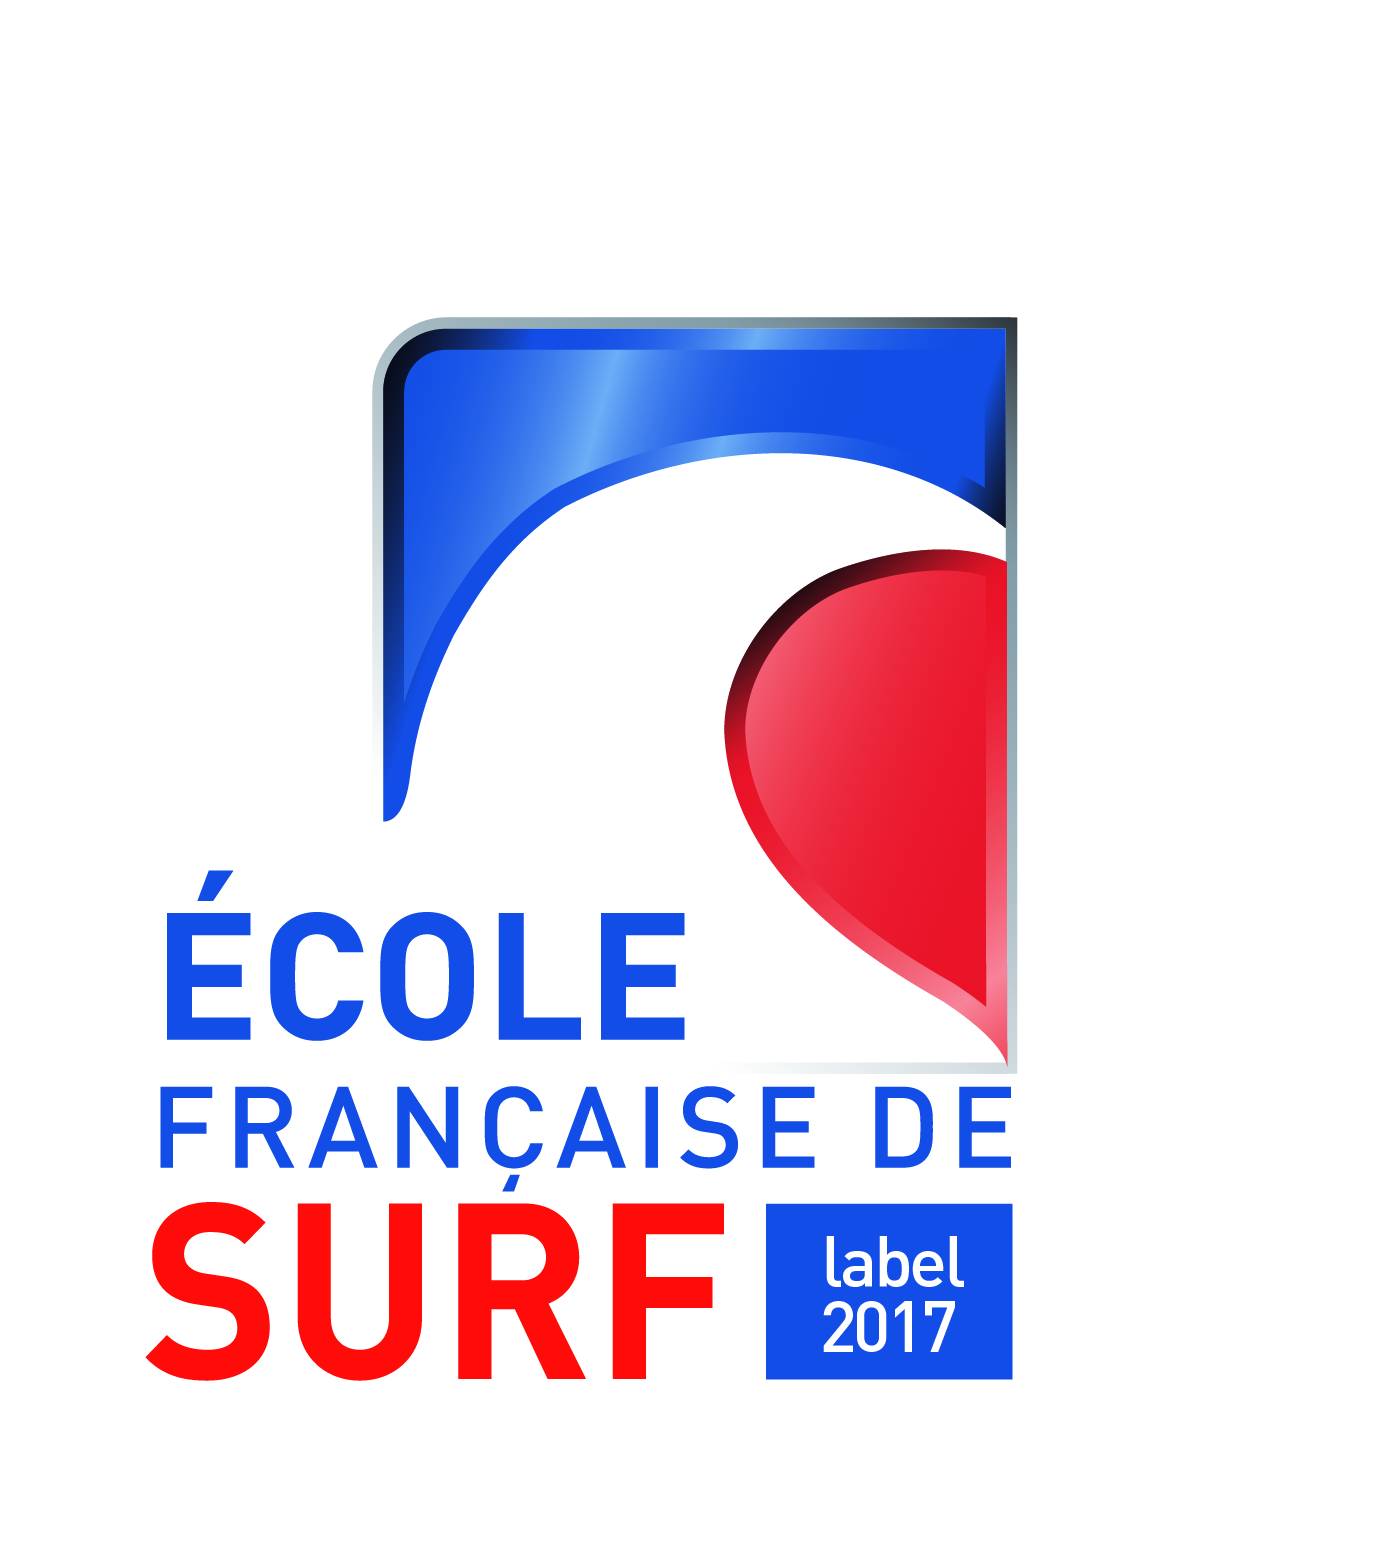 Logo surf